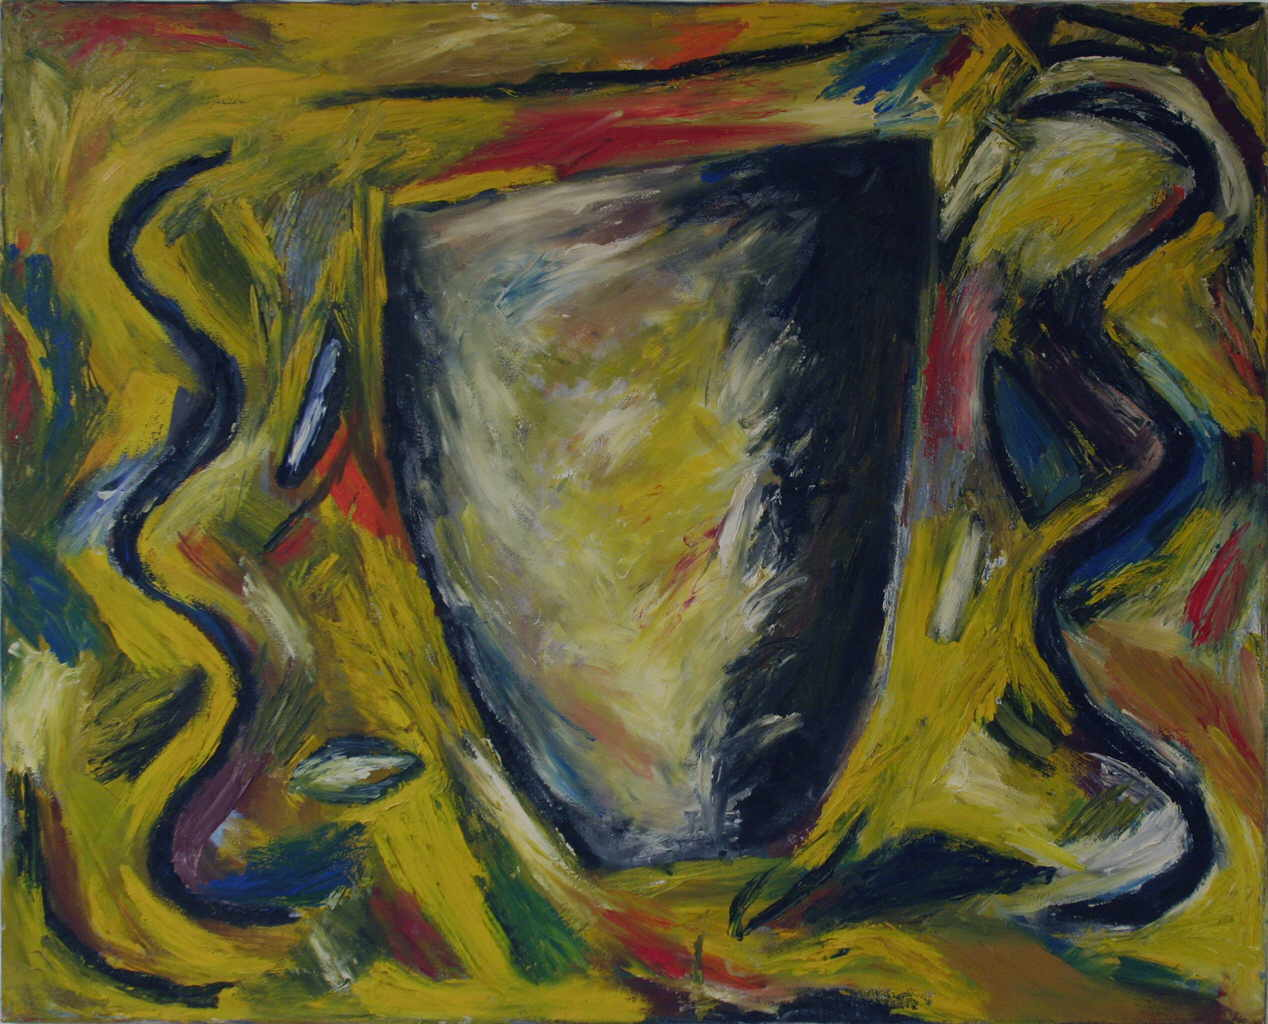 Kompatscher Florin 
untitled, 1985
mixed media / canvas
80 x 100 cm